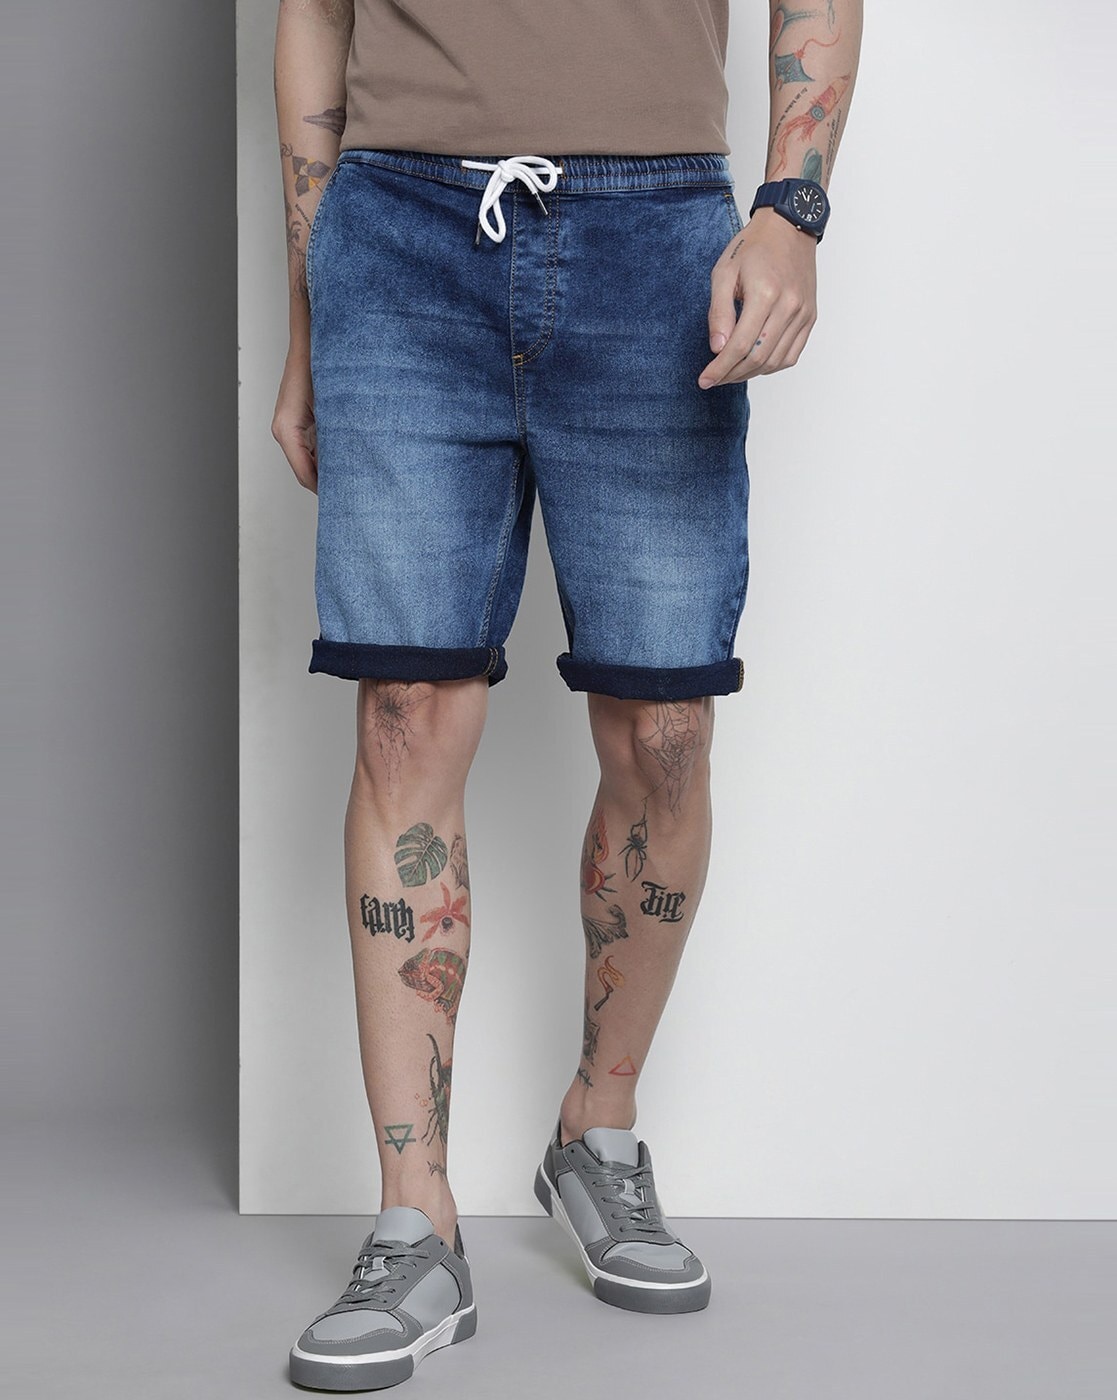 LONGBIDA Men's Loose Fit Denim Cargo Shorts with Multi Pockets, Blue, 42 :  Amazon.in: Clothing & Accessories